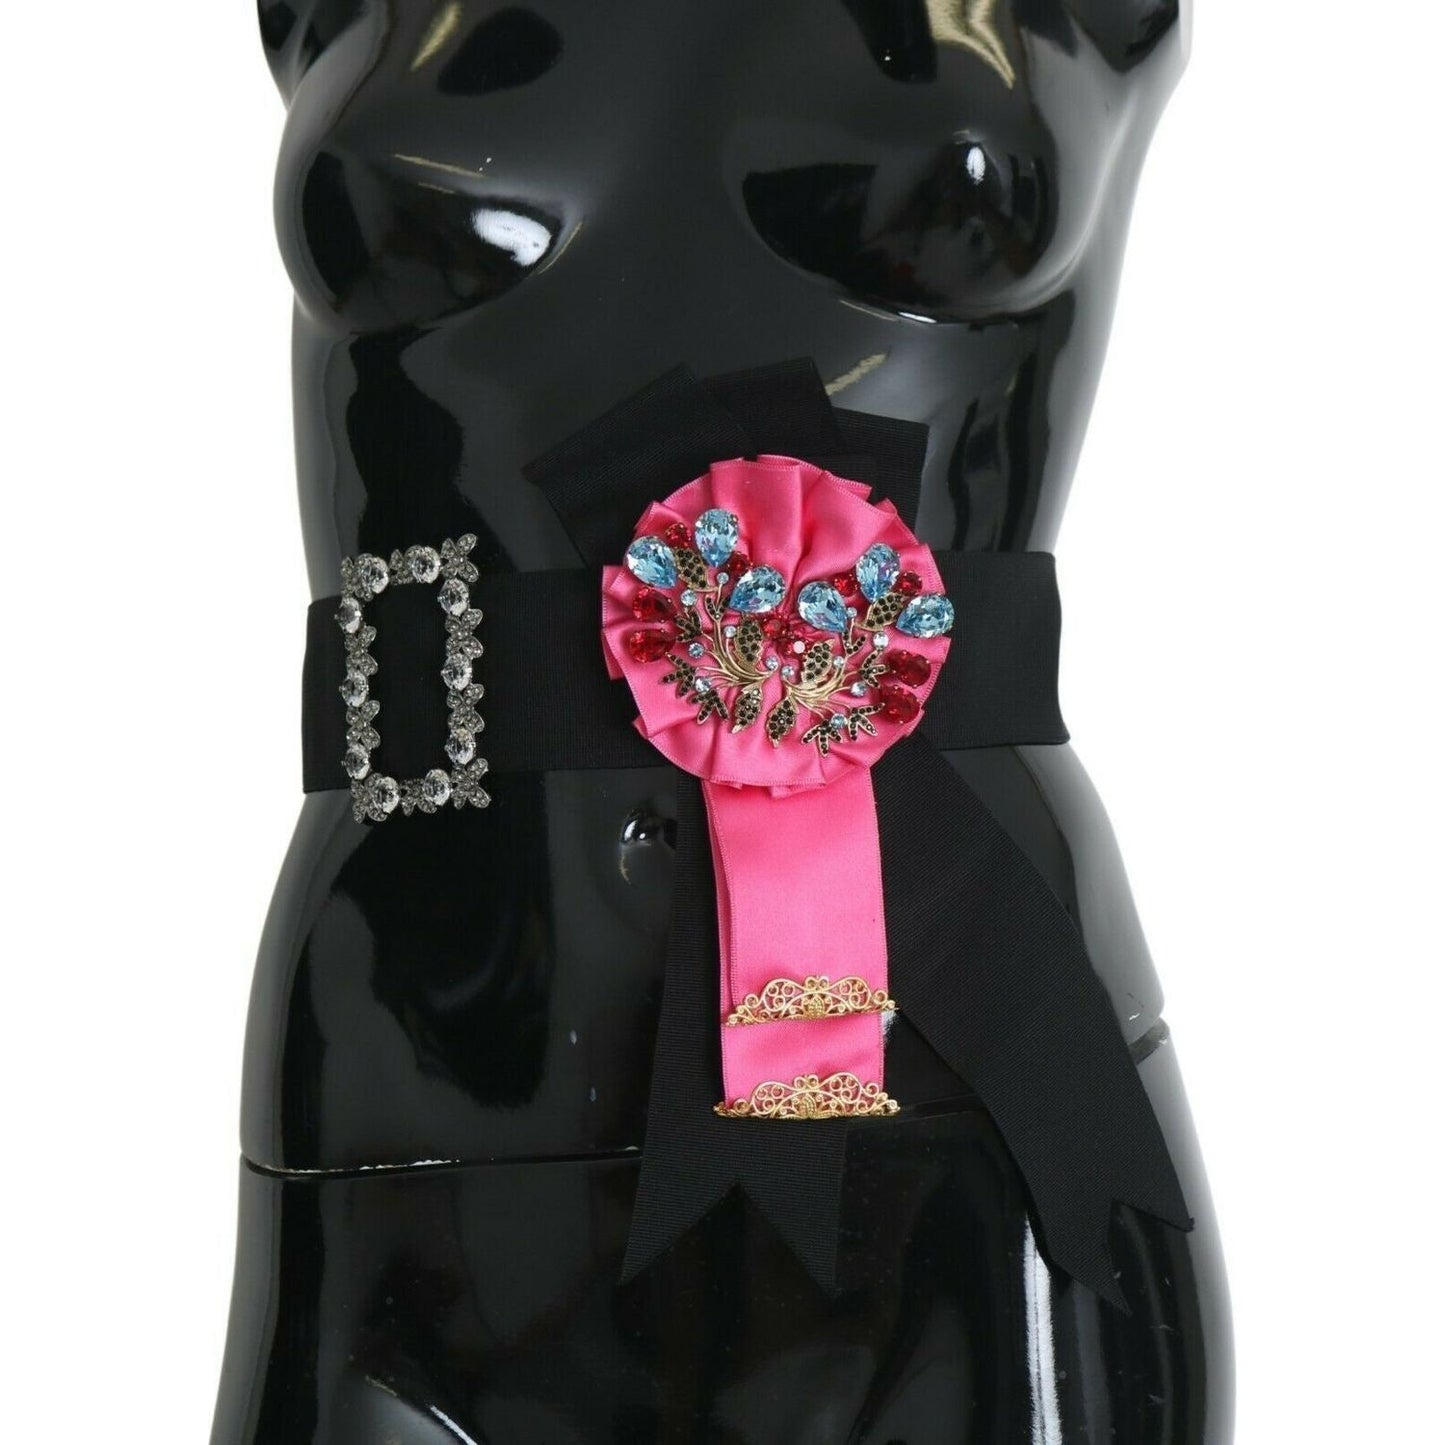 Dolce & Gabbana Elegant Floral Crystal Ribbon Waist Belt WOMAN BELTS black-pink-flower-brooch-crystals-cotton-belt s-l1600-56-1-b975dab2-a77_487faa45-b4f4-4137-a1ce-529dd9fcbac1.jpg